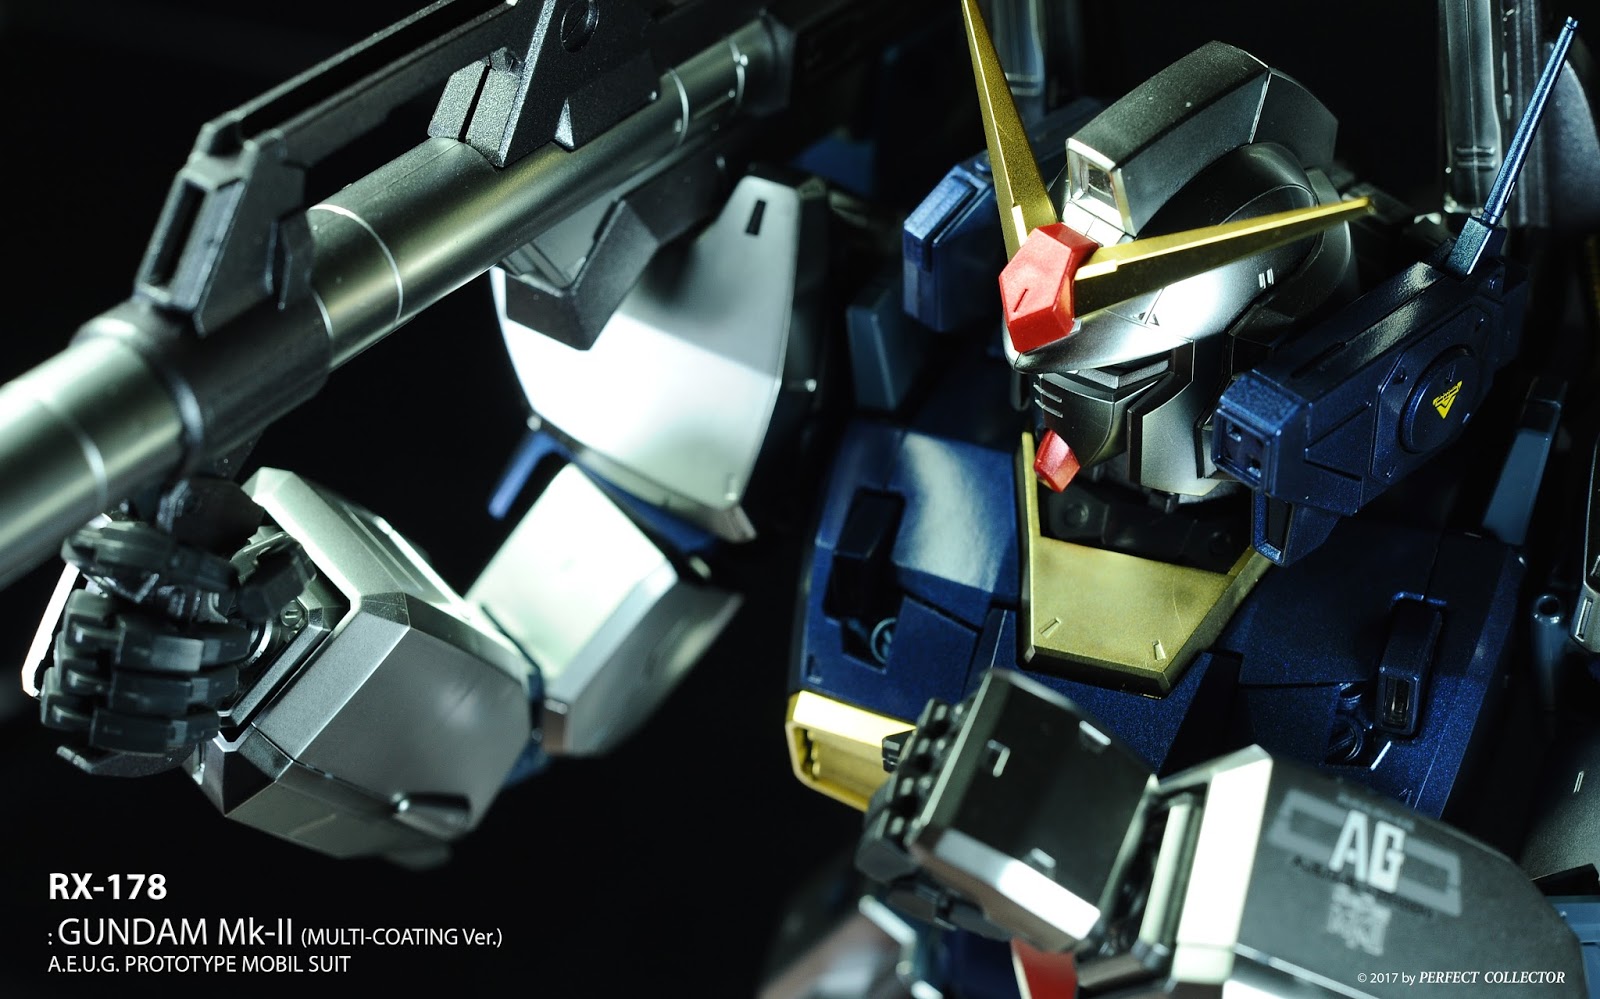 G-リミテッド: Gallery: PG 1/60 Gundam Mk-II Multi Coating Version